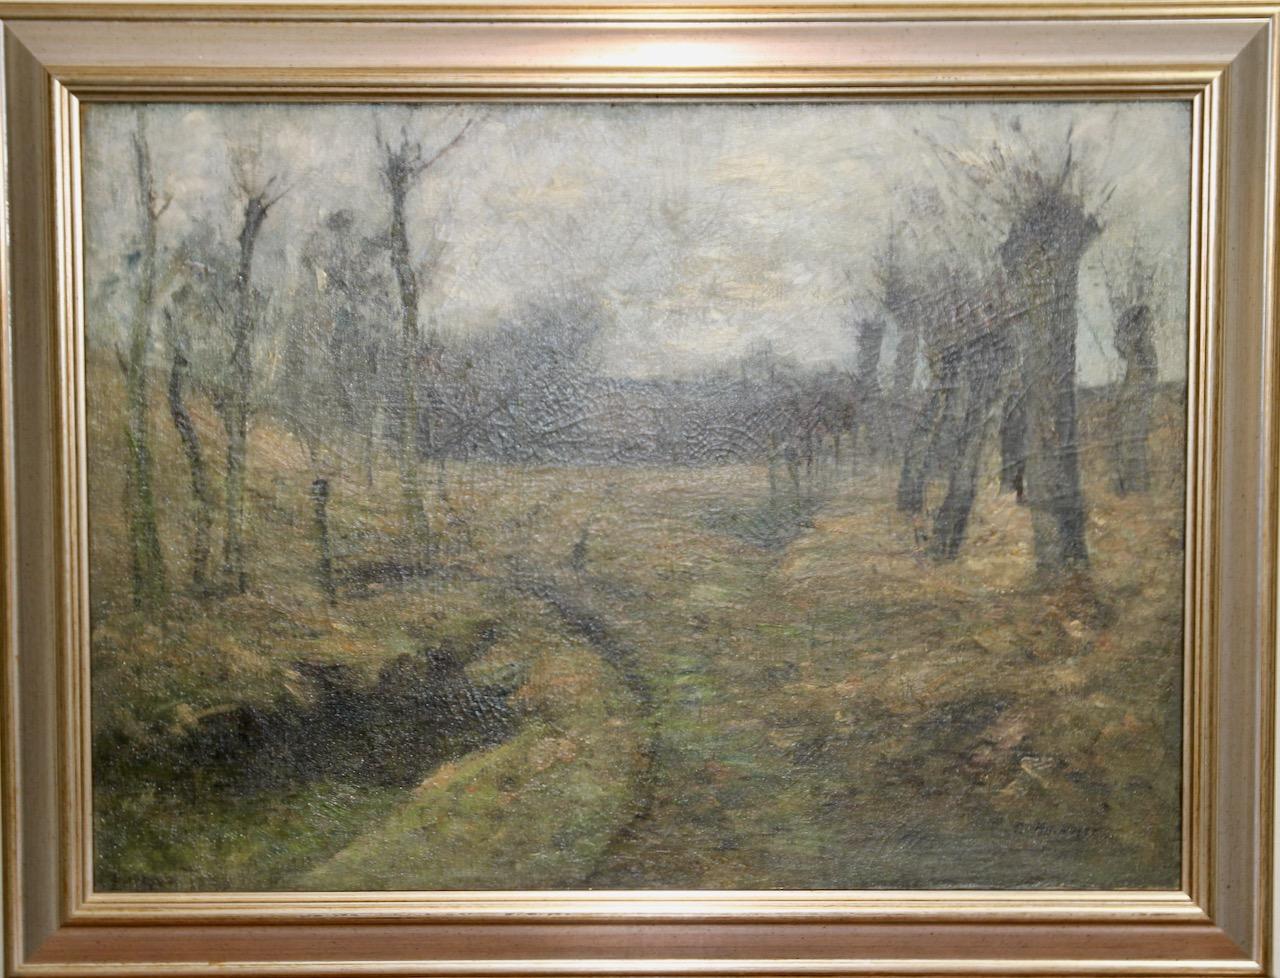 Rudolf Höckner, Forest Landscape. Hamburg, Wedel, Germany. Oil on canvas.

Dimensions with frame in cm 63 x 82.5